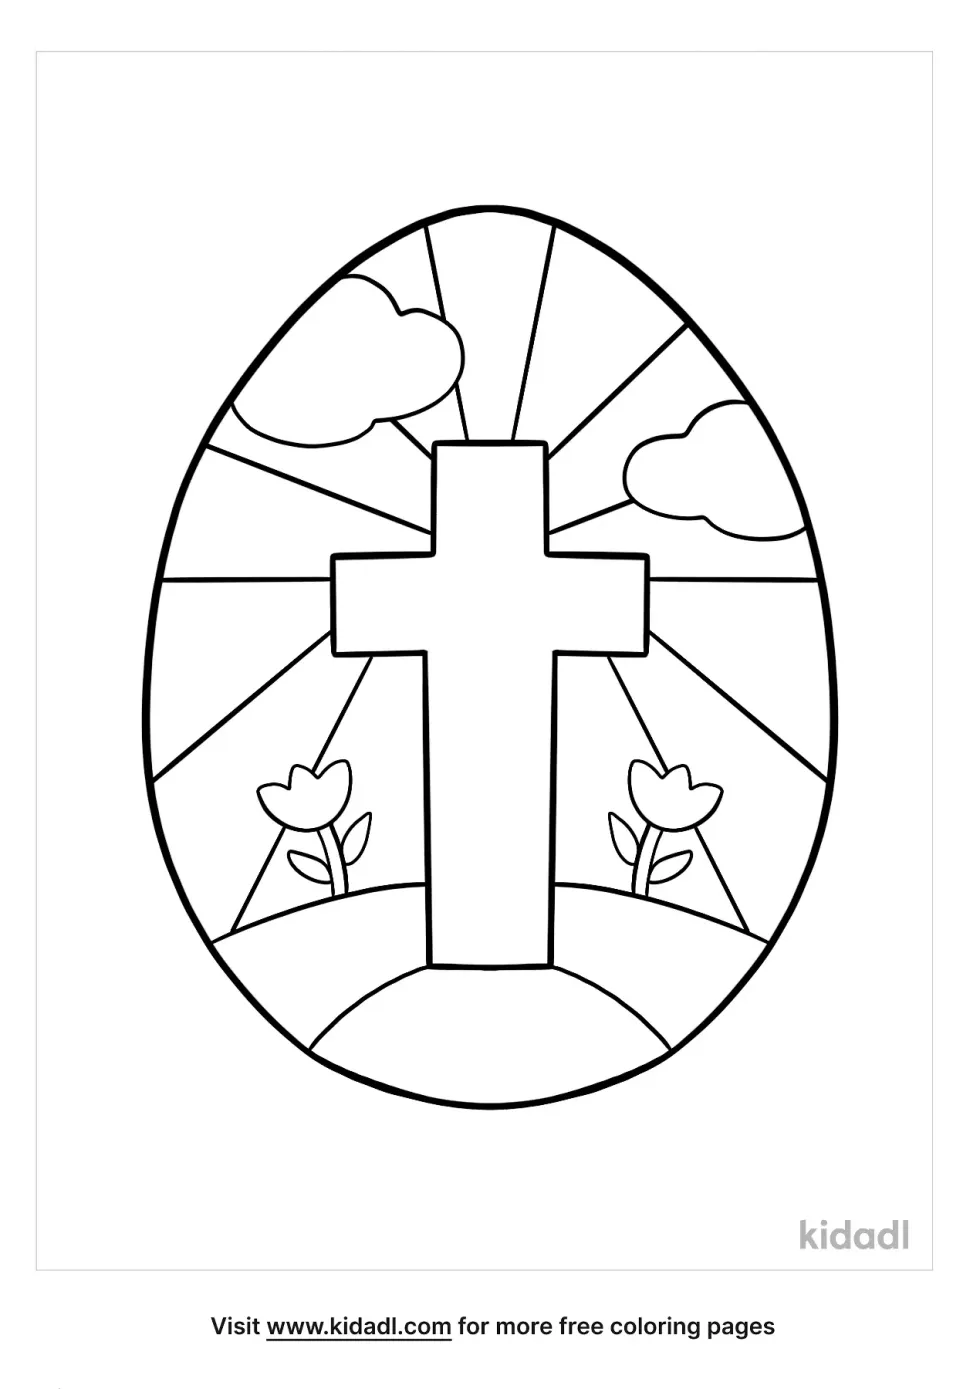 Easter Egg And Cross